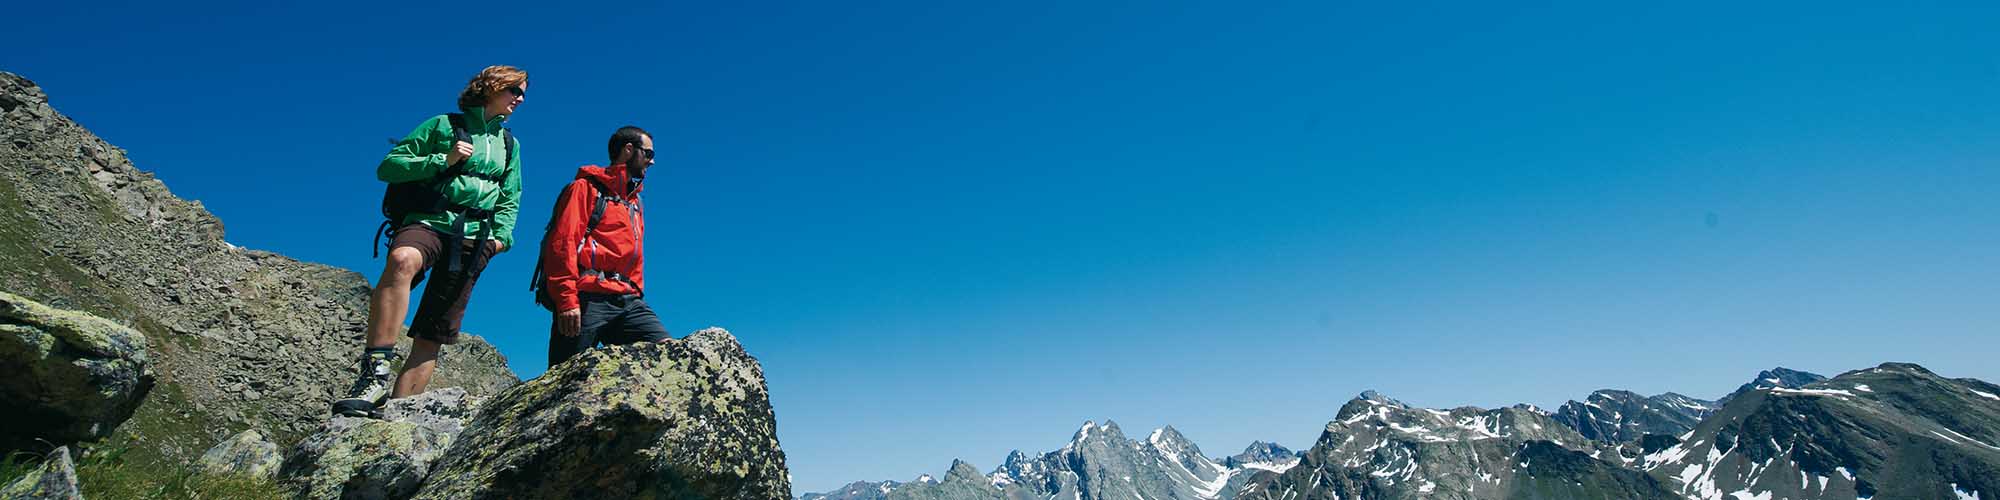 Hotel Davos - 700 km  - markierte Wander-, Themen-, Berg- und Panoramawege